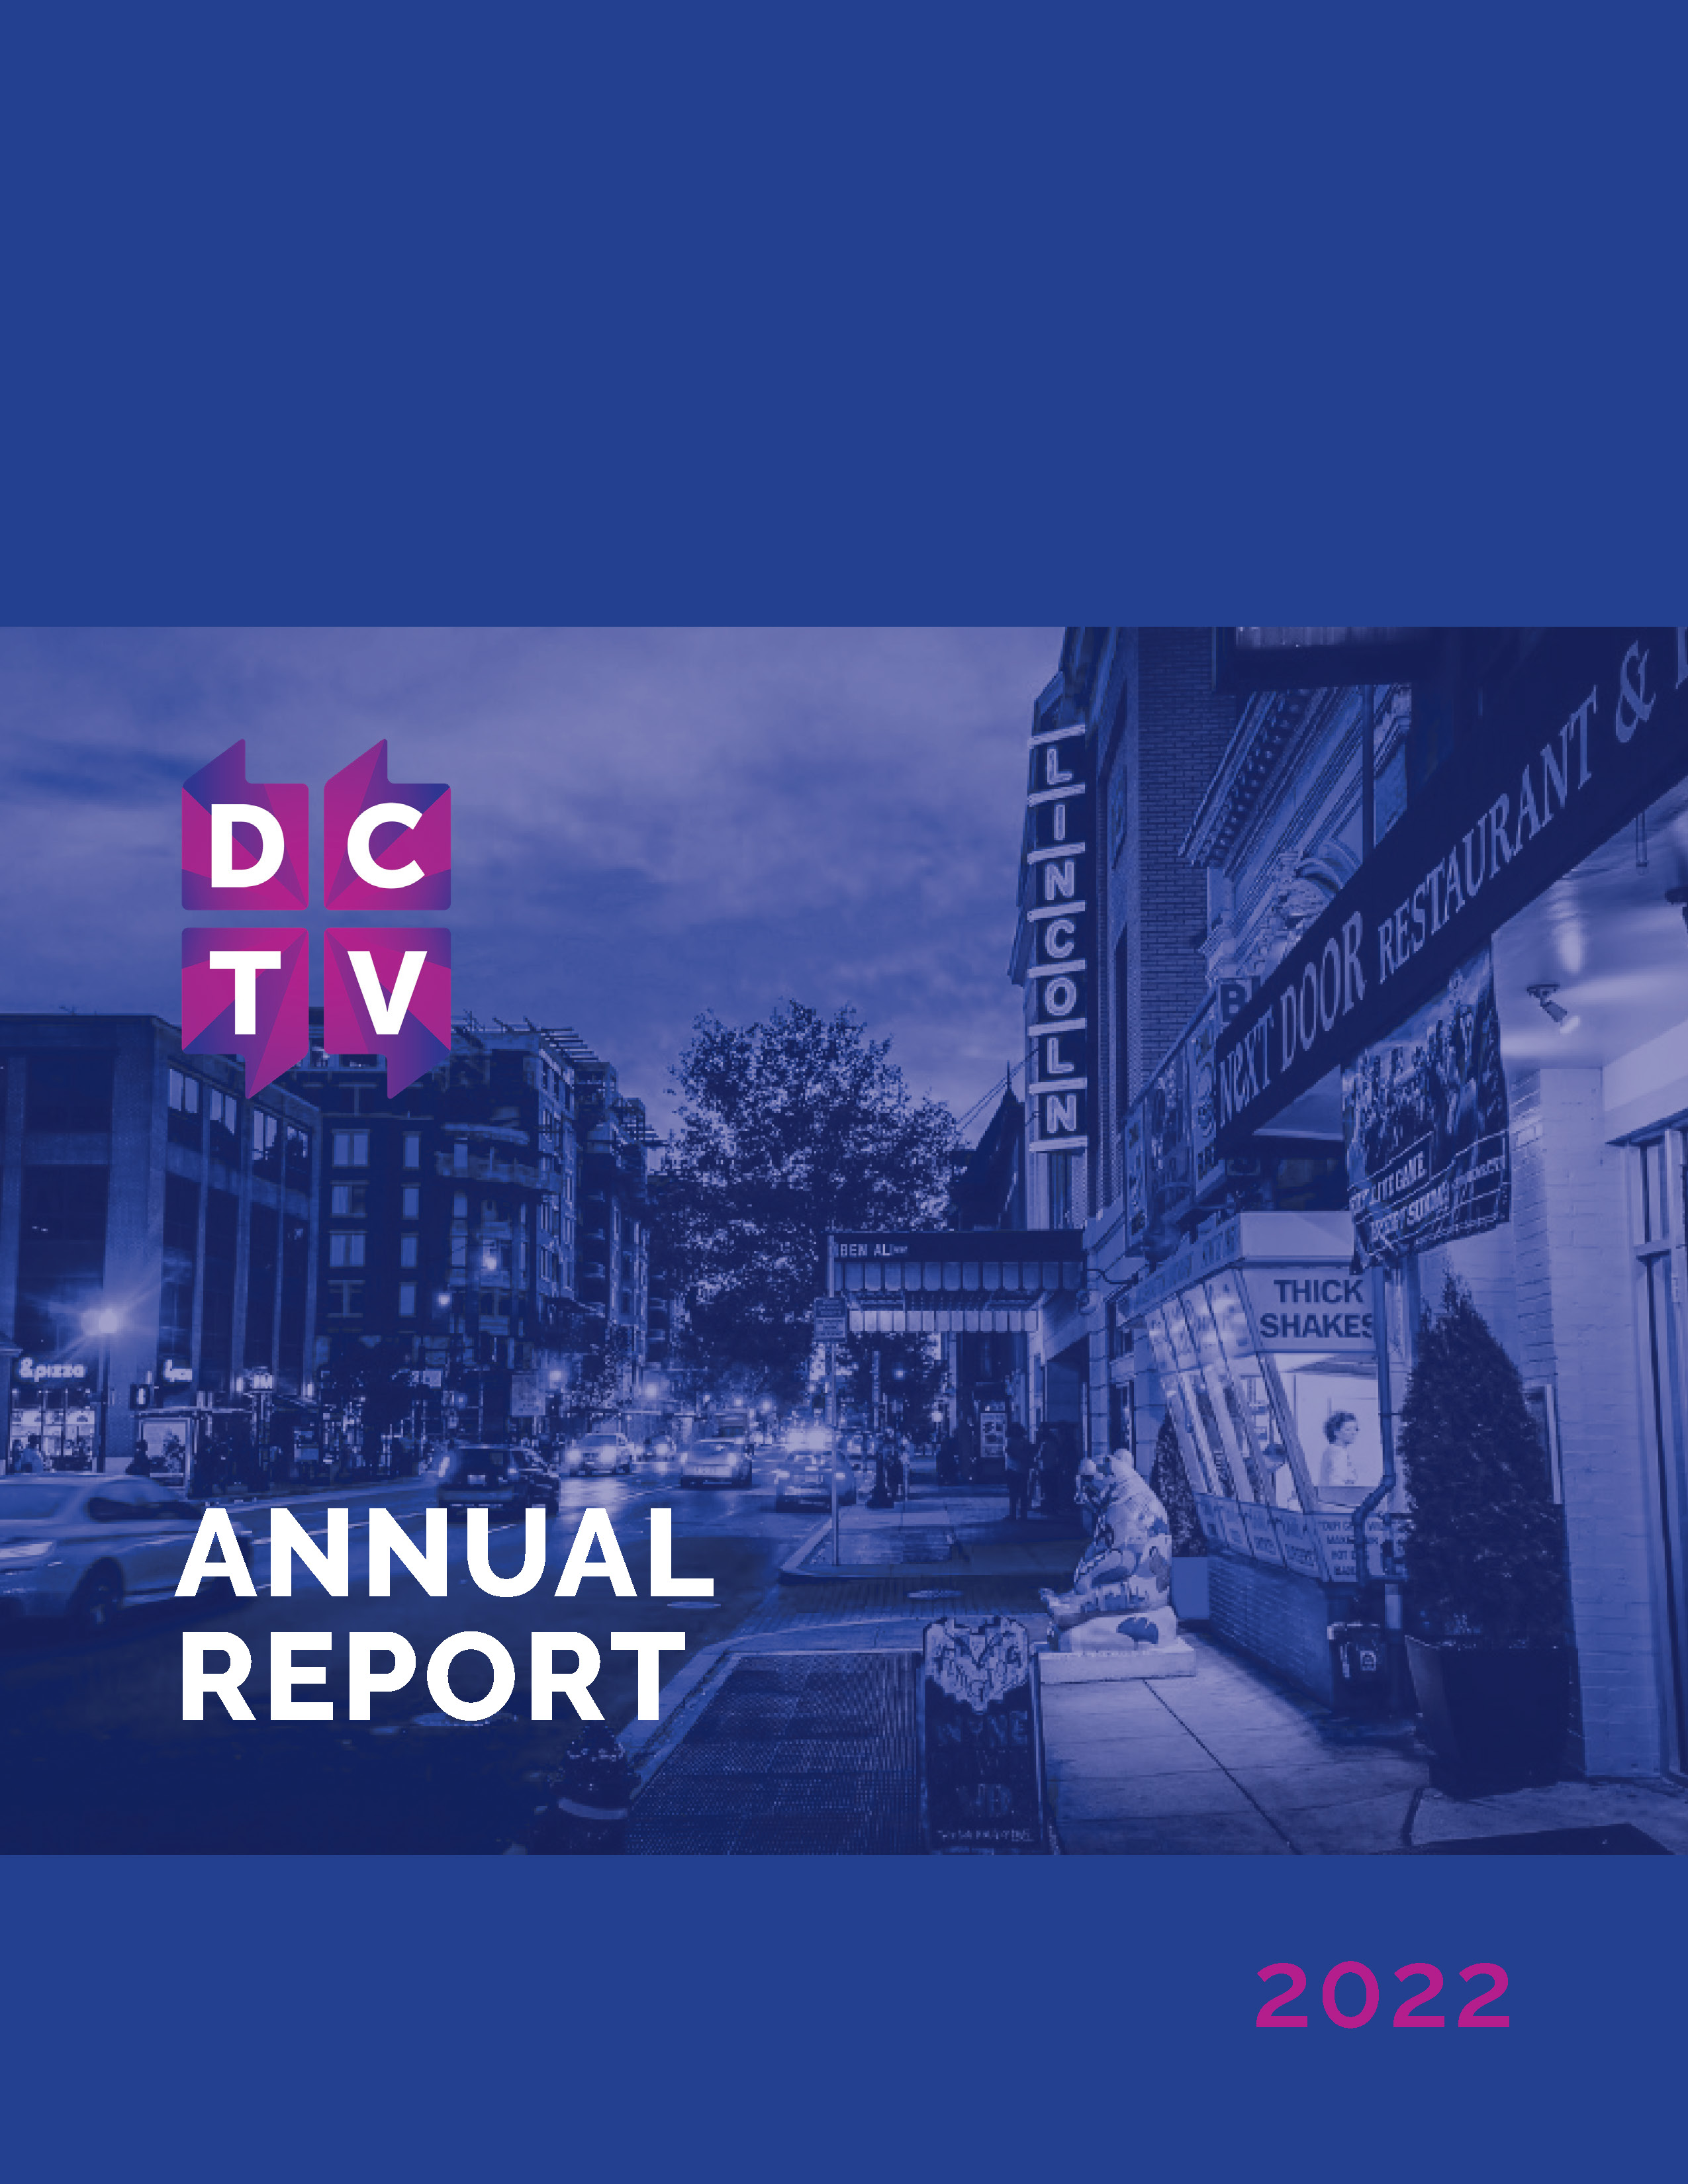 DCTV Annual Report 2022